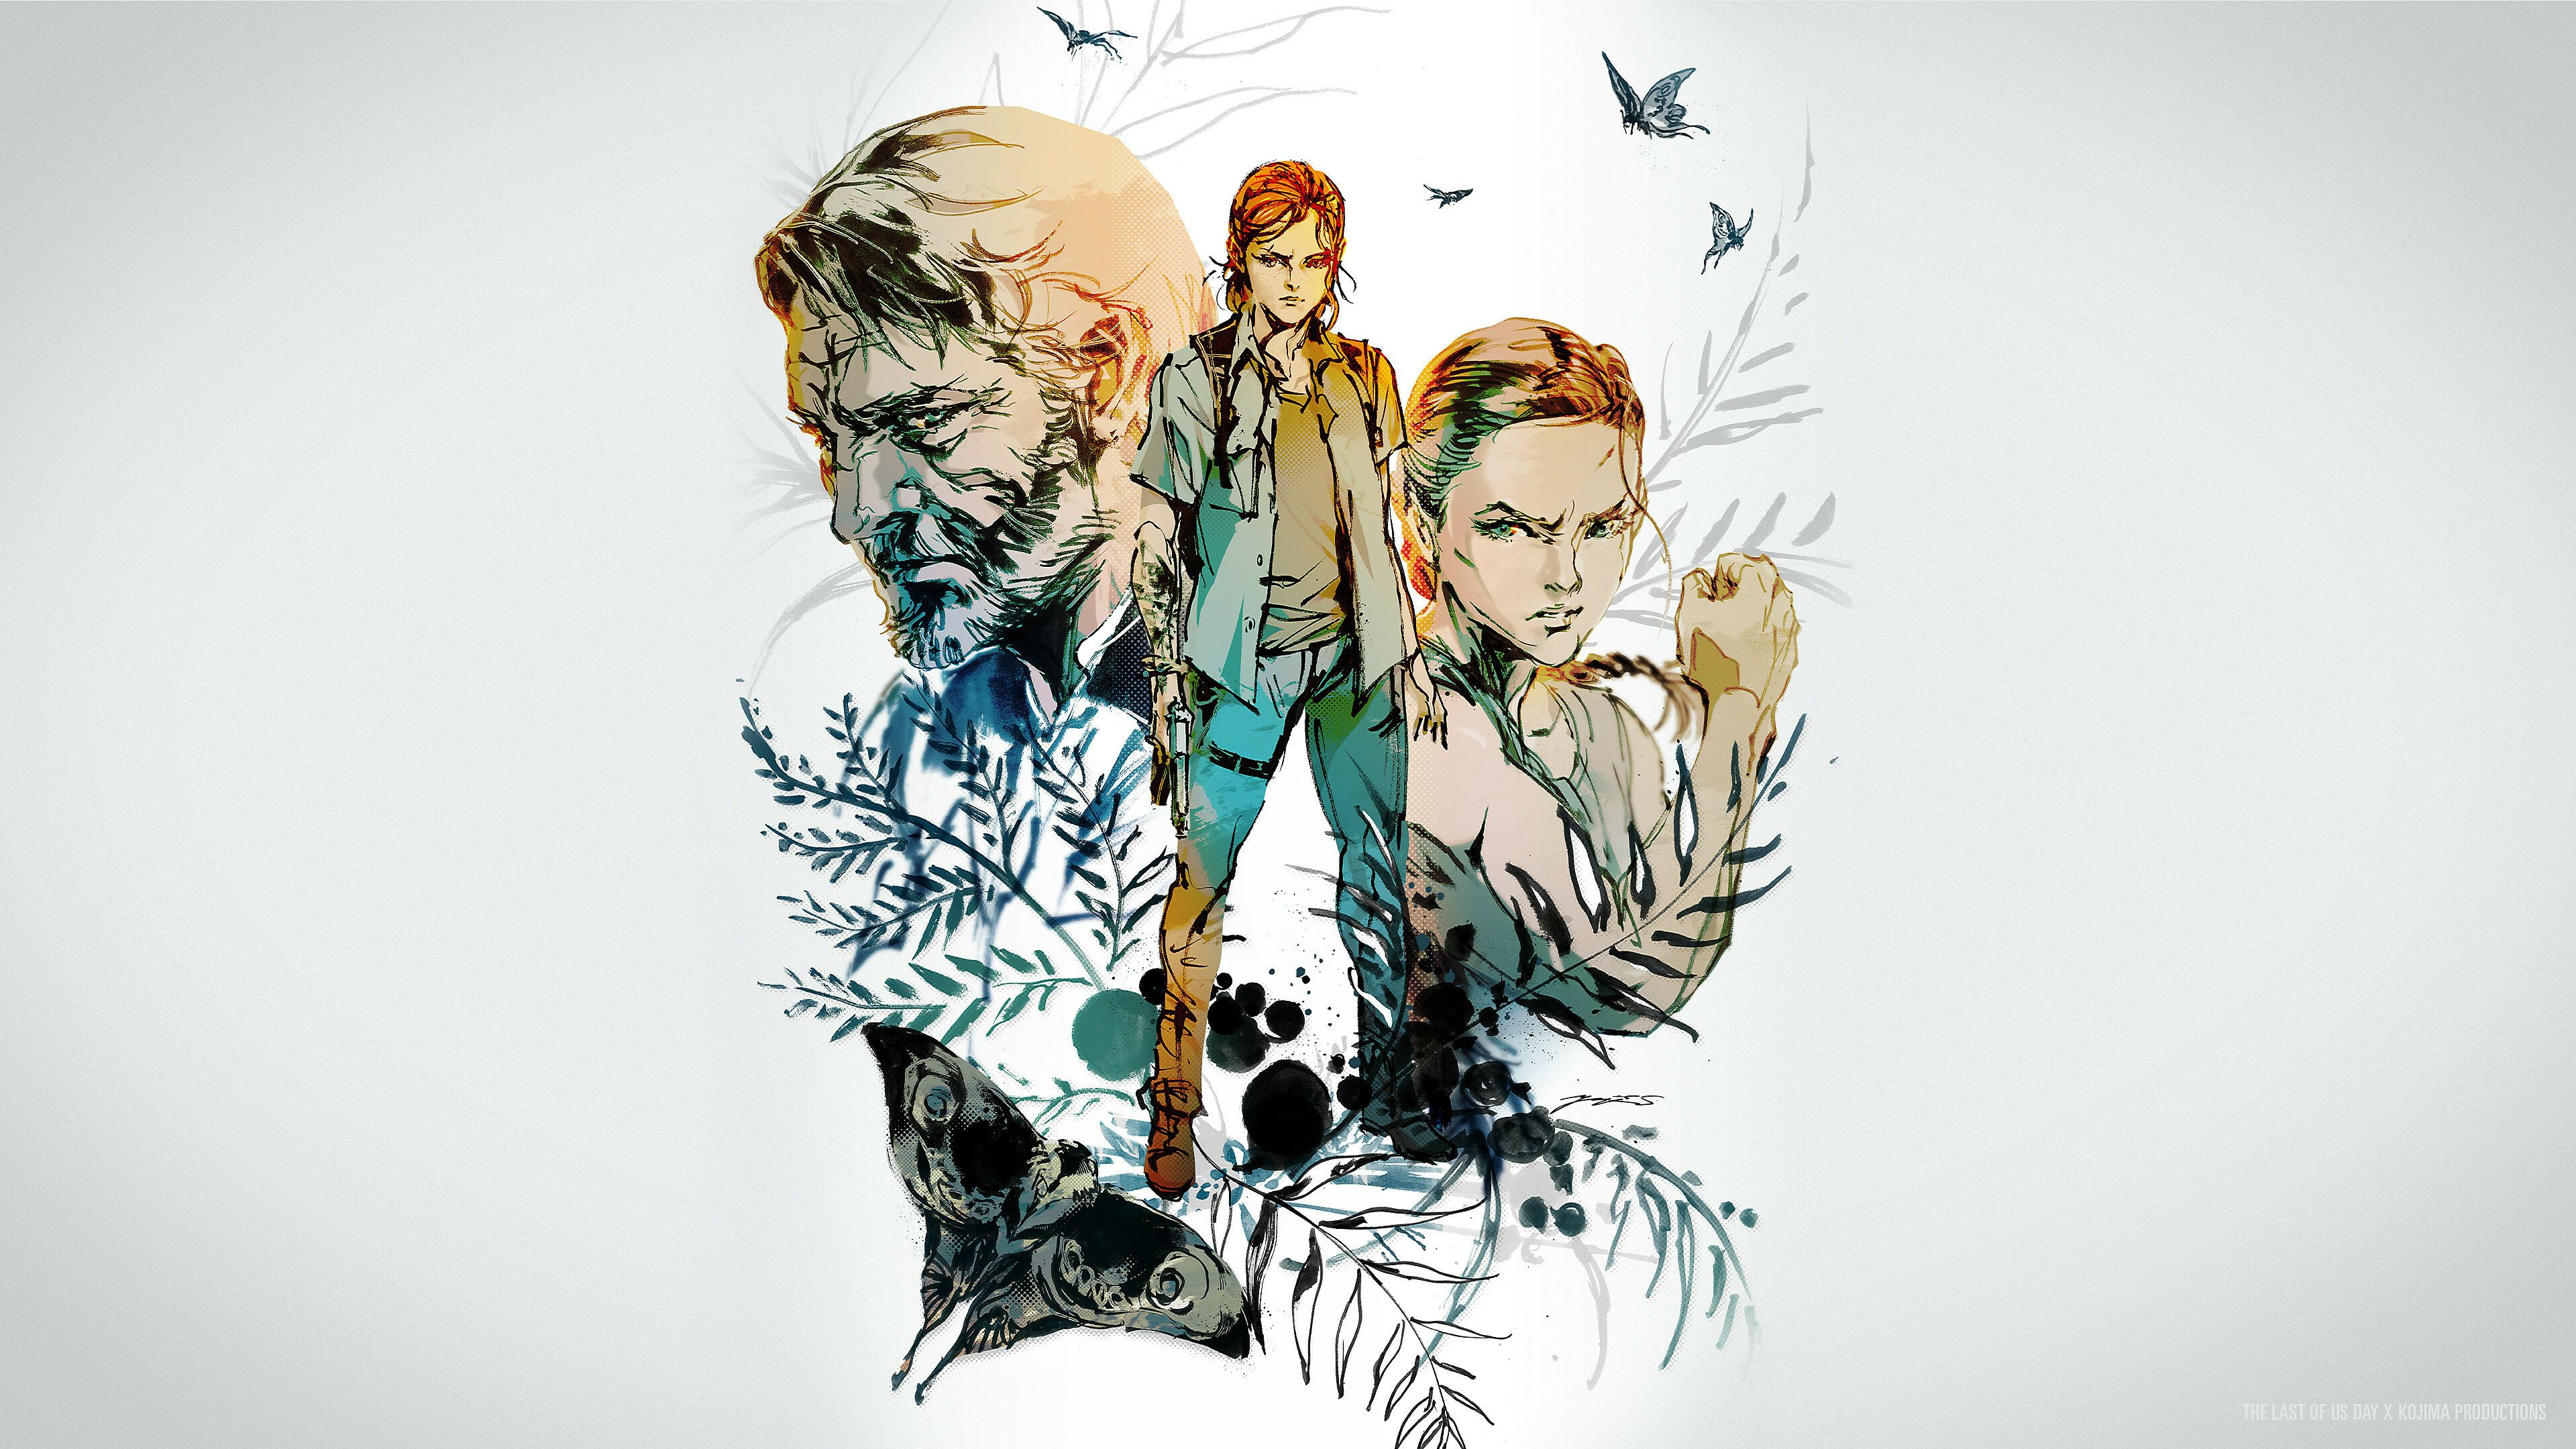 Концепт-арт с героями The Last of Us от художника Metal gear Ёдзи Синкавы.
Источник: Naughty Dog